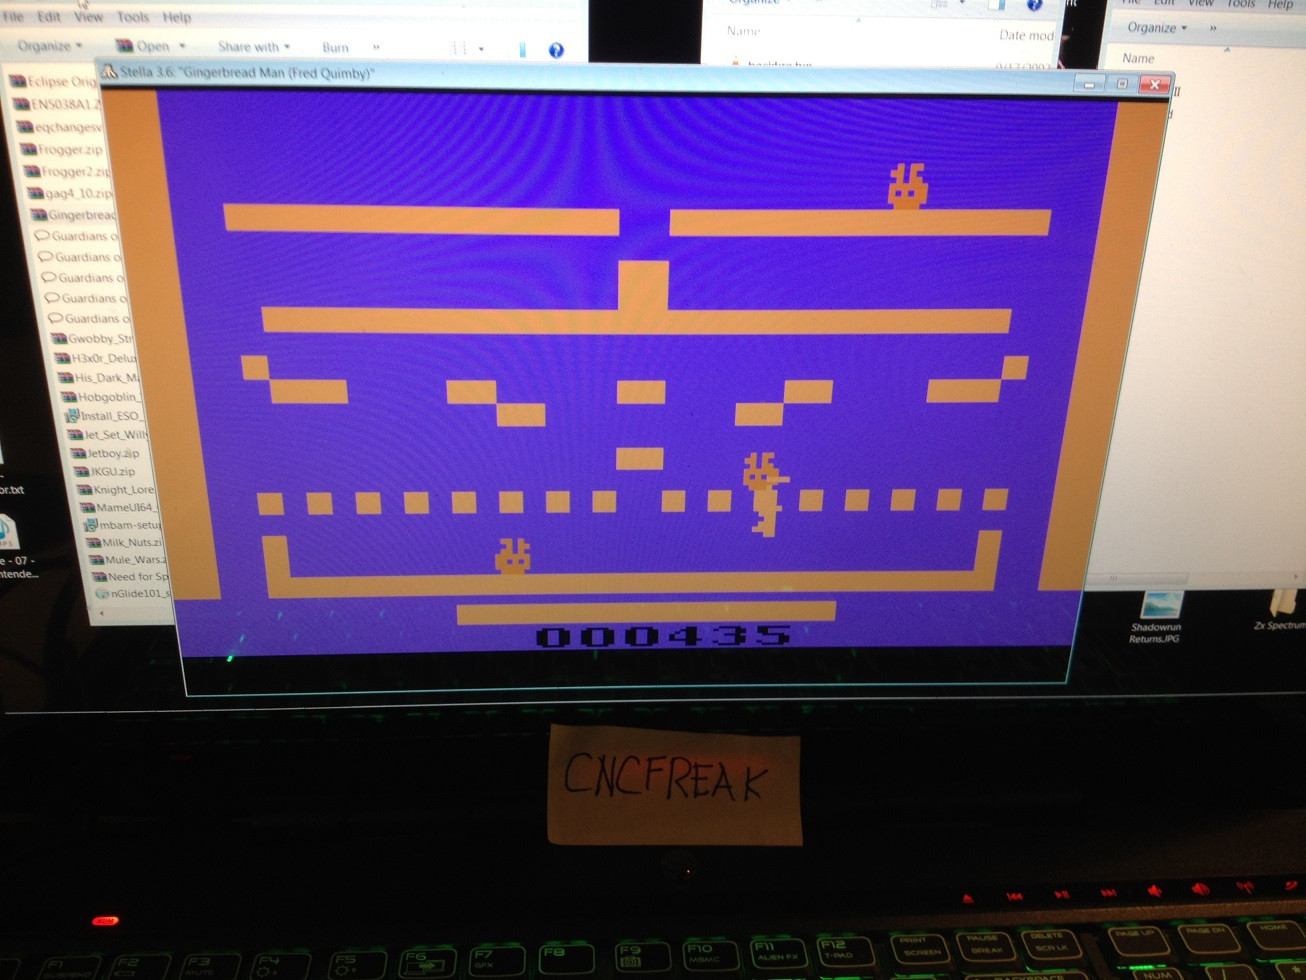 cncfreak: Gingerbread Man (Atari 2600 Emulated Novice/B Mode) 435 points on 2013-10-15 20:26:08